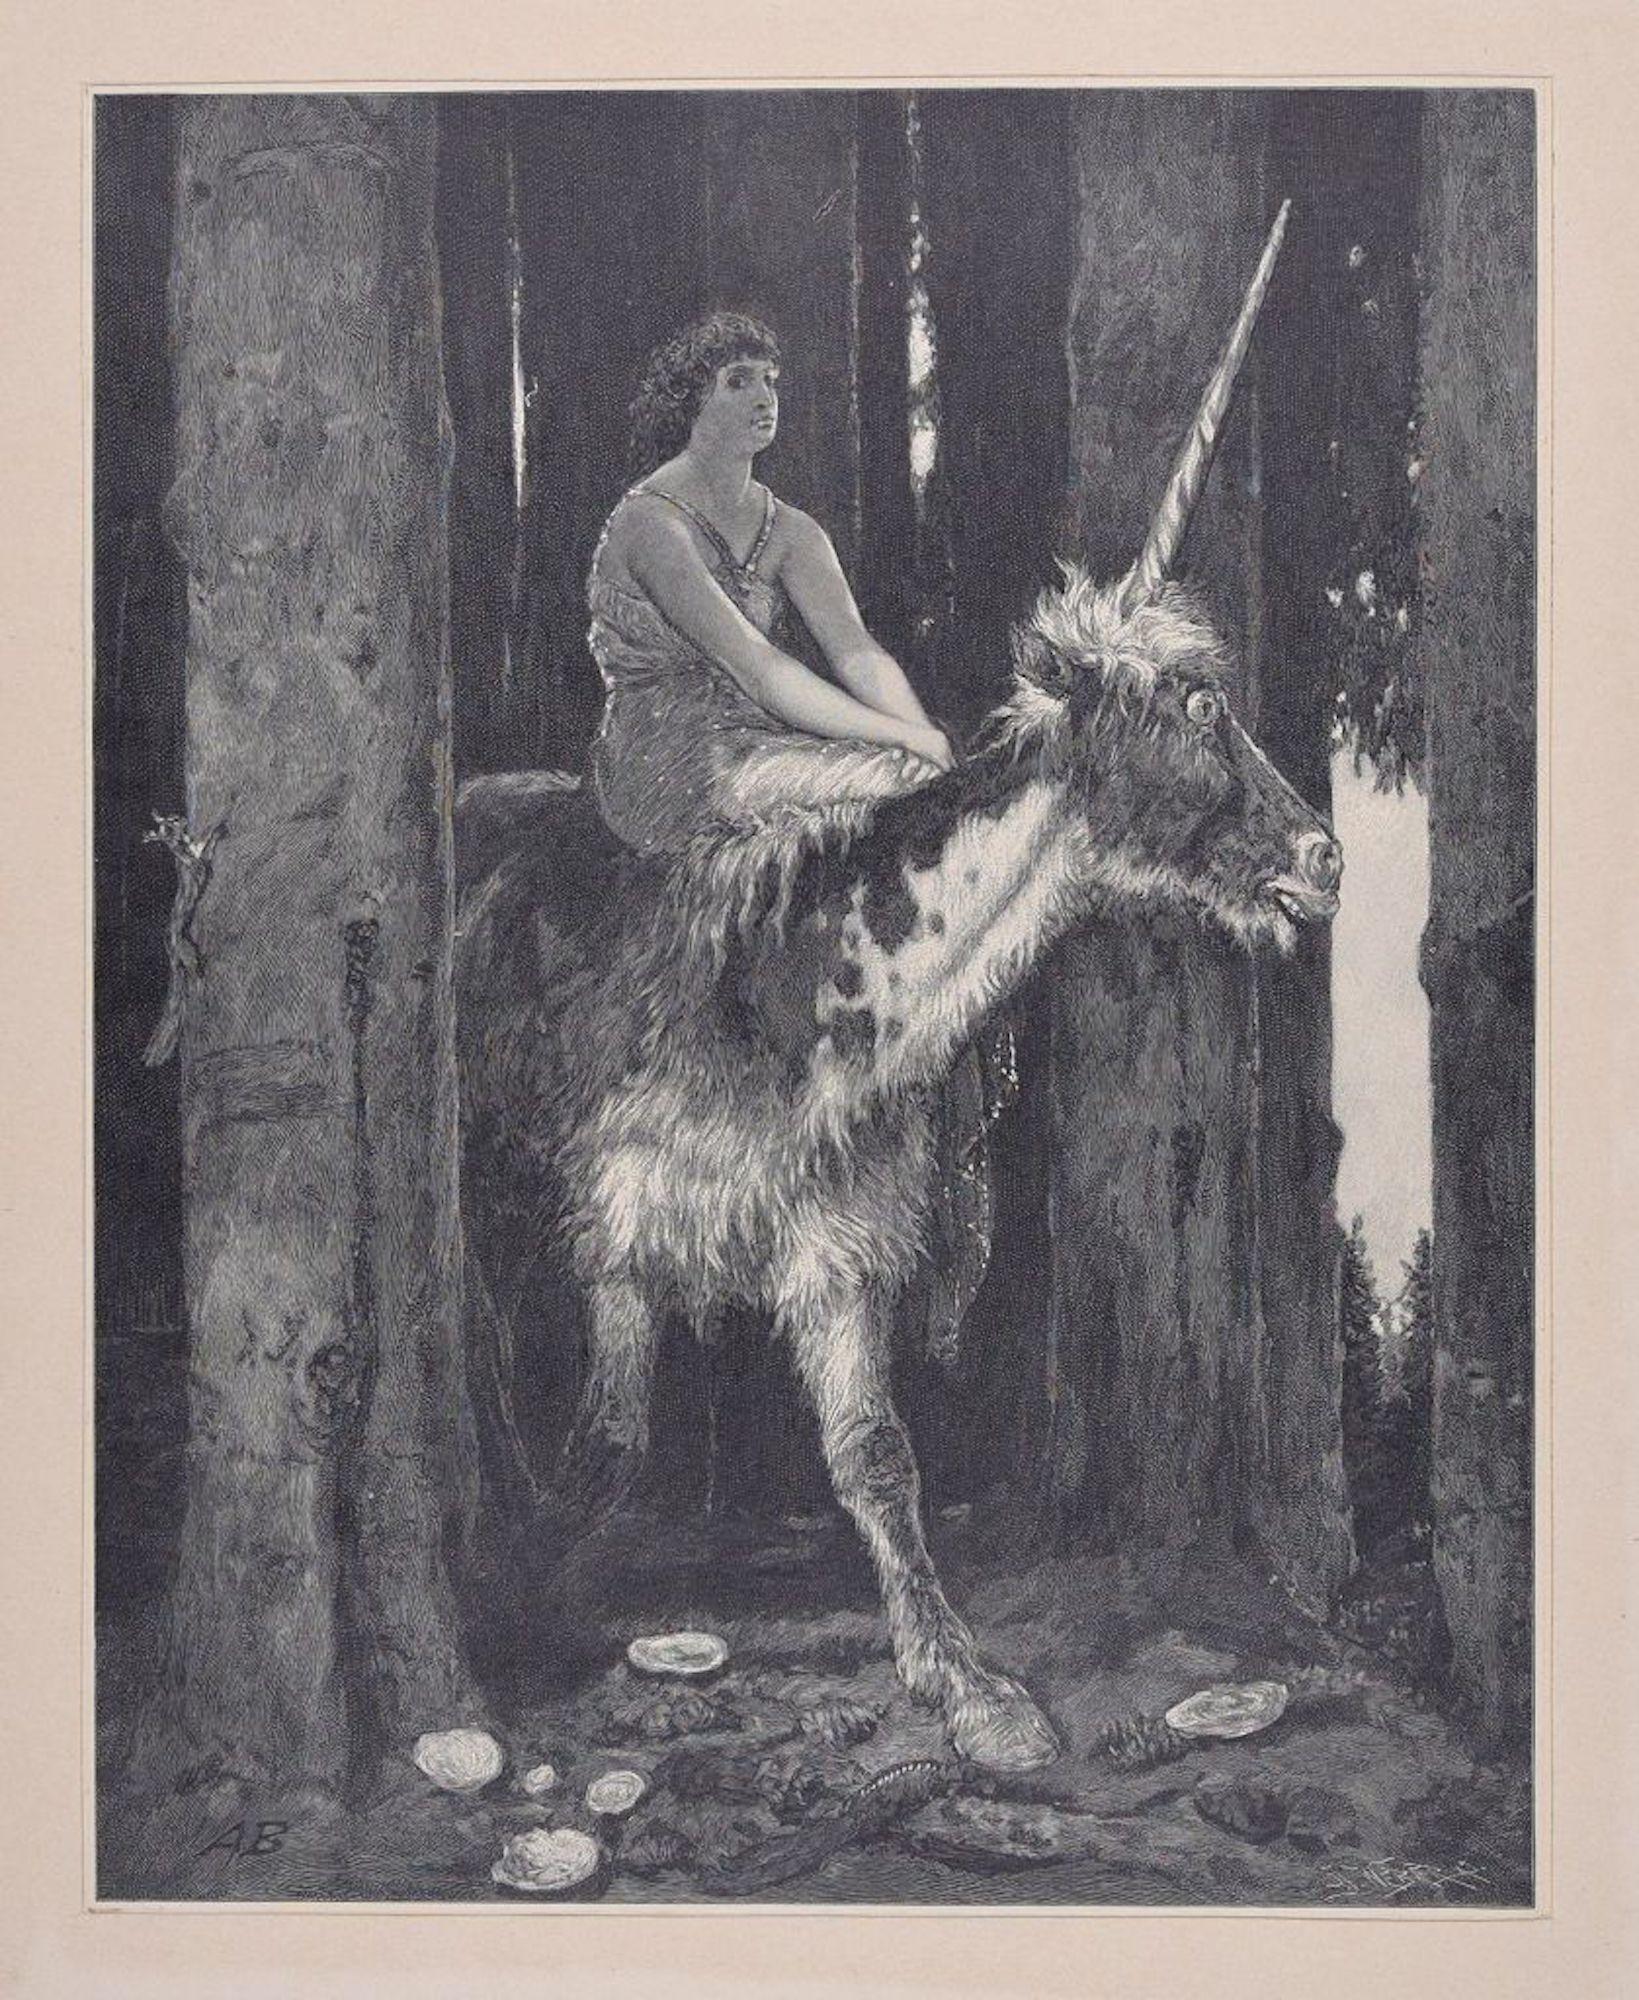 Arnold Bocklin (After) Figurative Print - Silence in the Woods - Original Woodcut After J.J. Weber - 1898